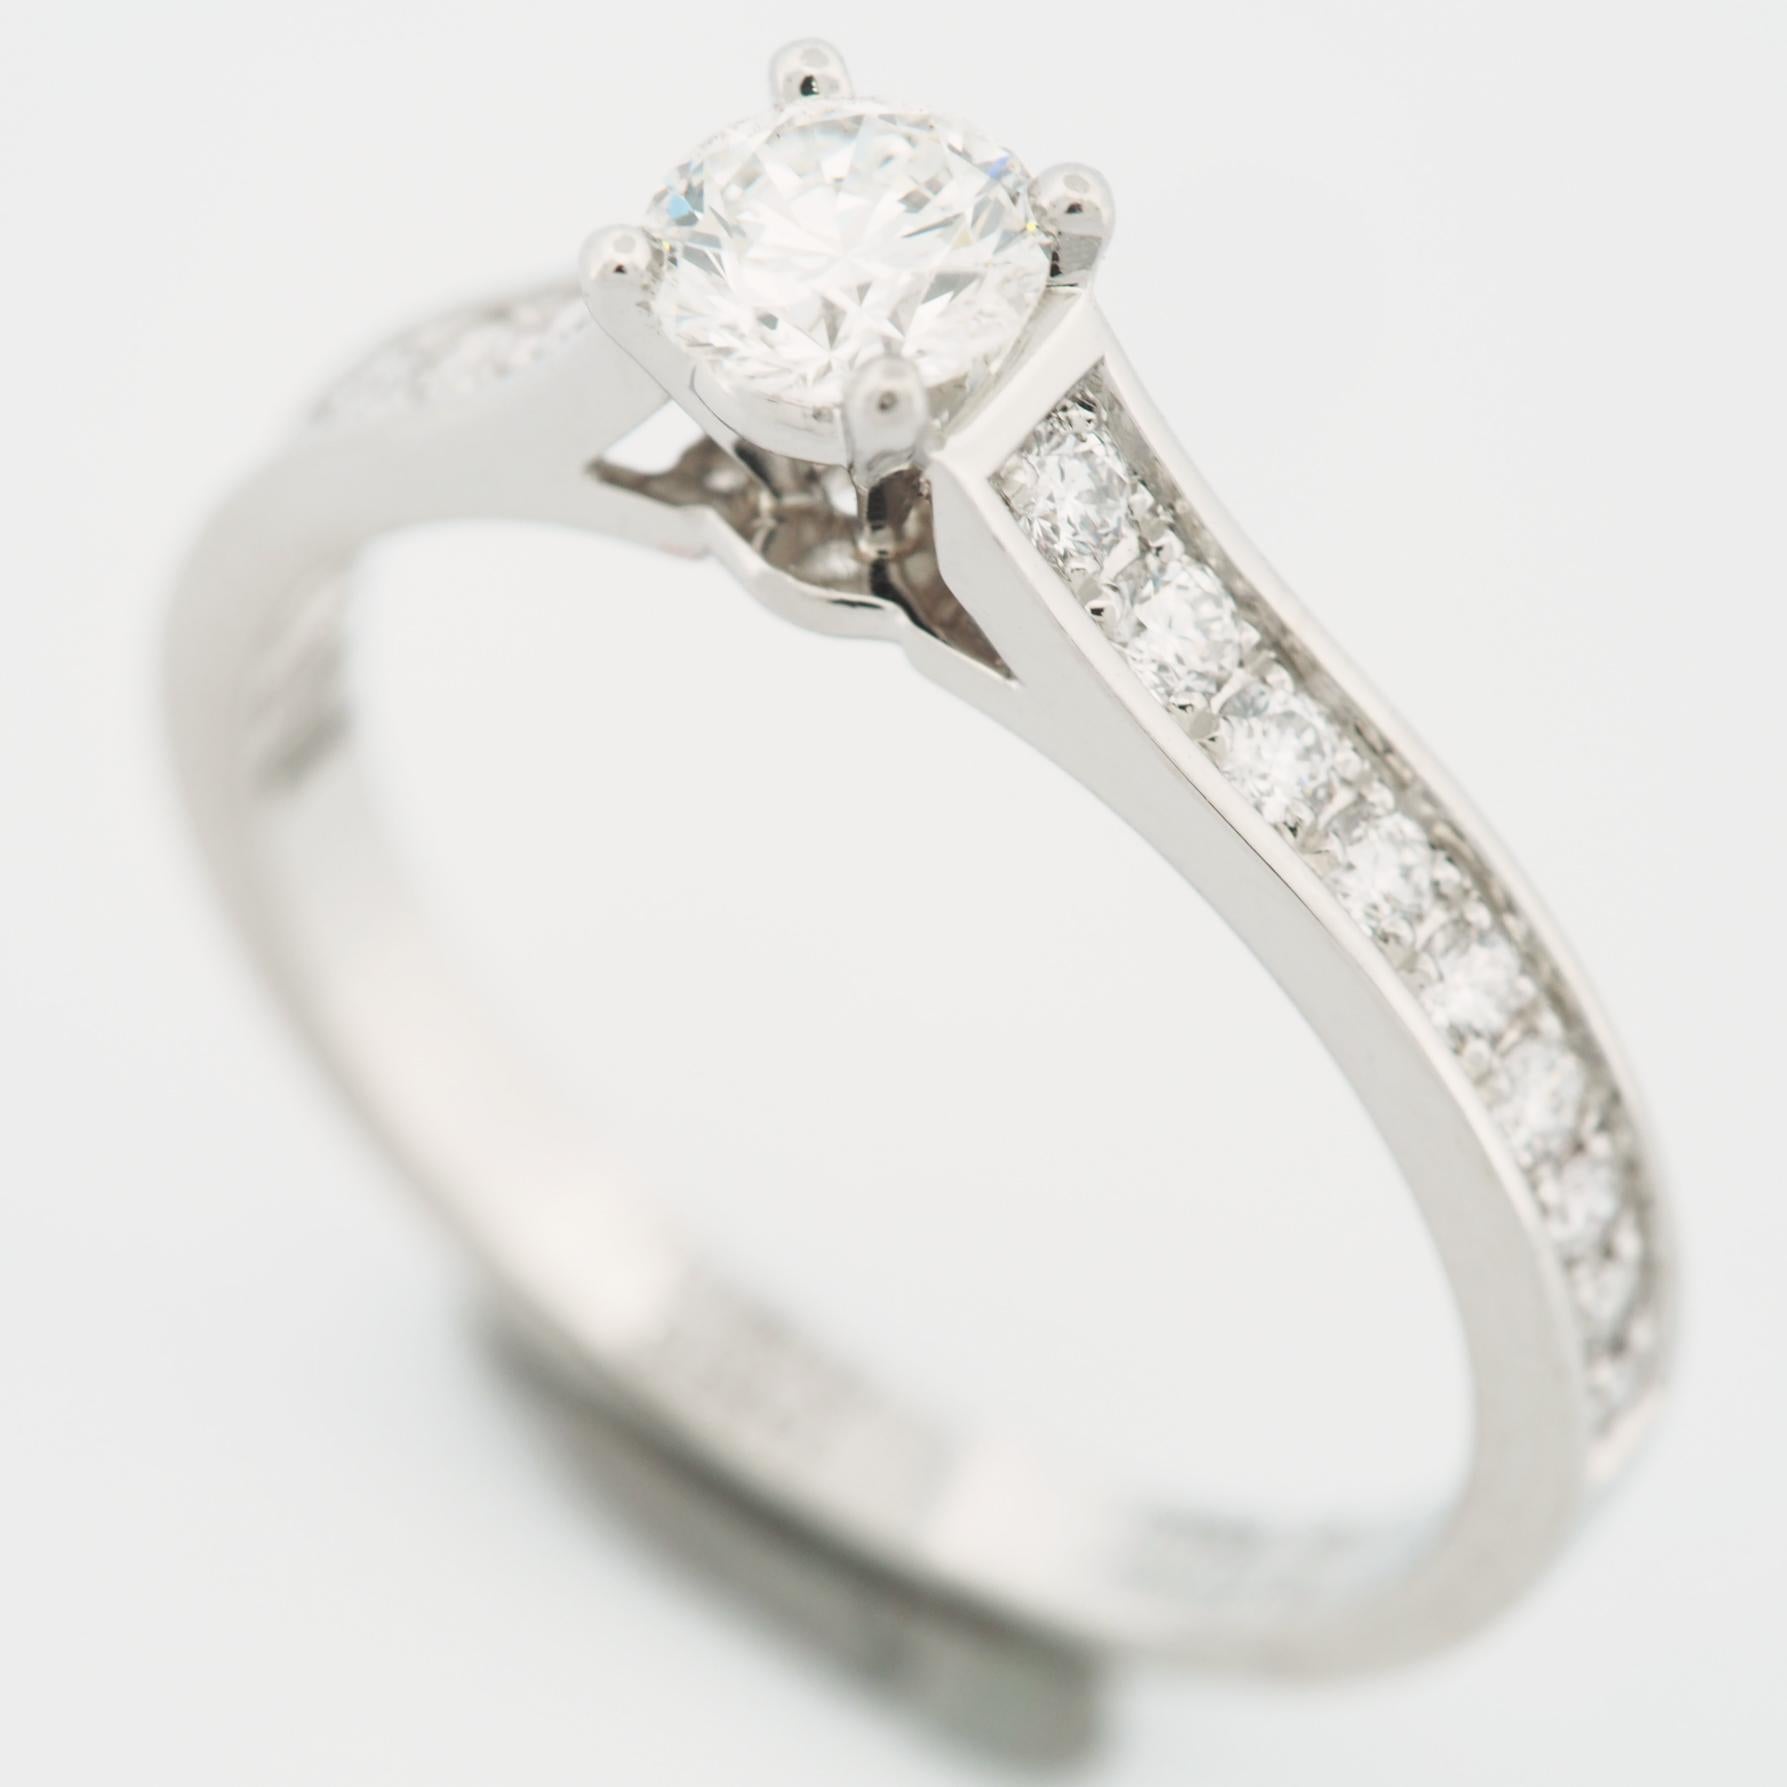 Item: Authentic Cartier 1895 Diamond Solitaire Ring
Stones: Diamond ( center stone 0.30 ct ) with 18 pave diamonds
Color: H
Clarity: VVS2
Polish: Excellent 
Symmetry: Excellent
Fluorescence: None
Metal: Platinum 950
Ring Size: 49 US SIZE 4.75 - 5.0